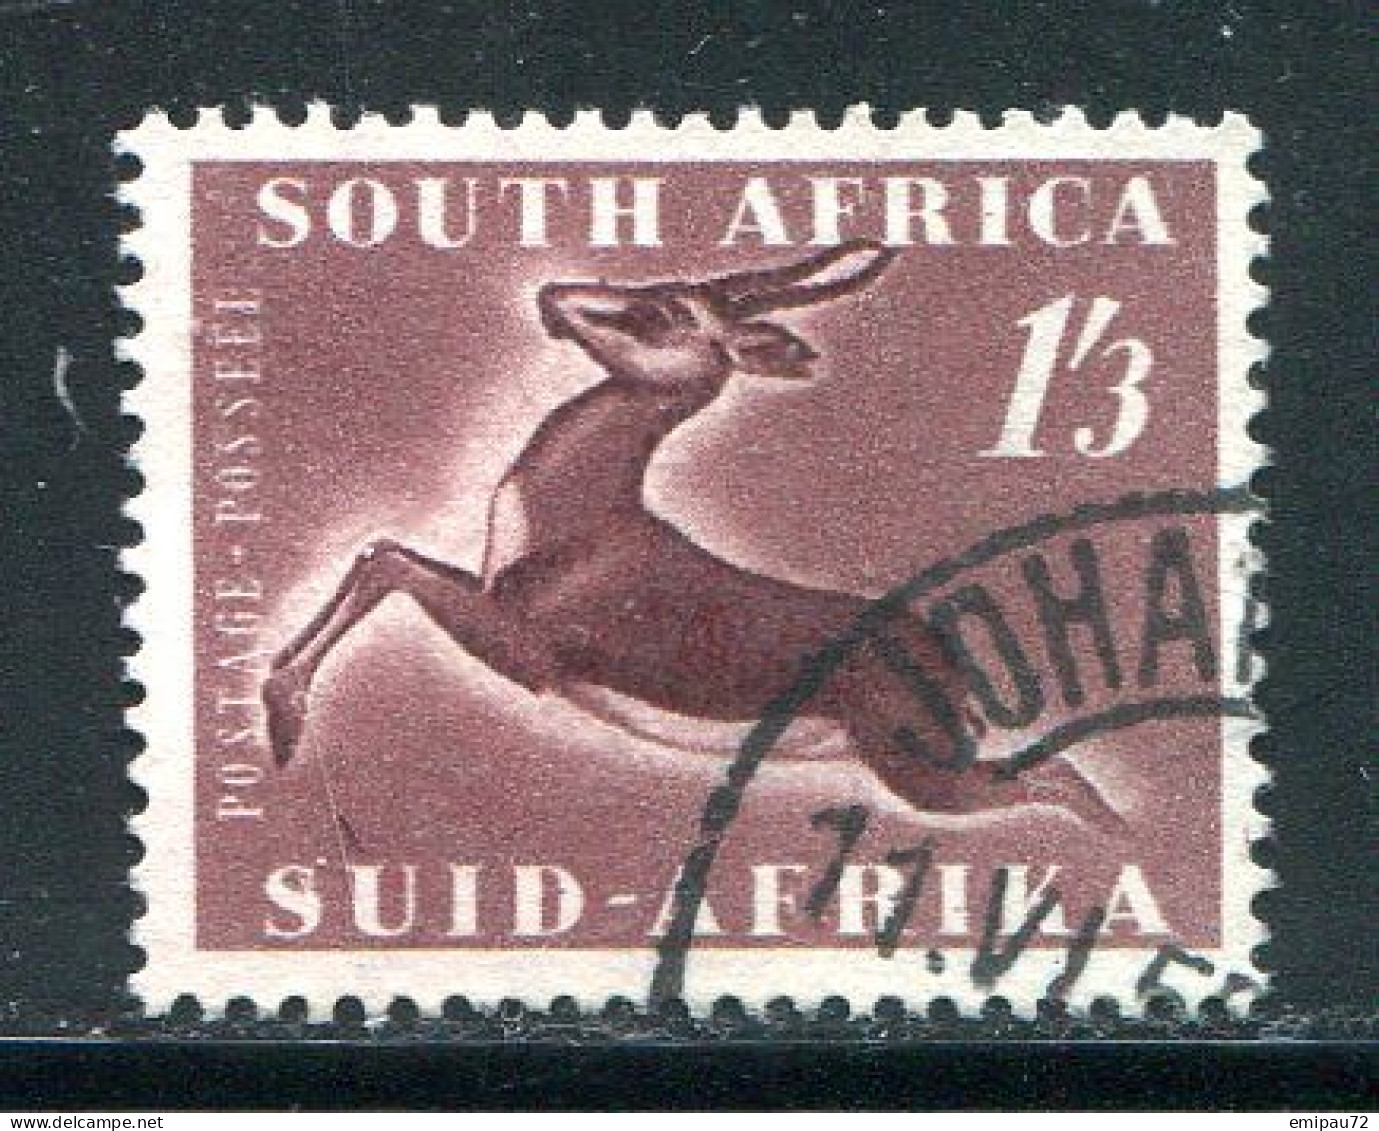 AFRIQUE DU SUD- Y&T N°197- Oblitéré - Usados